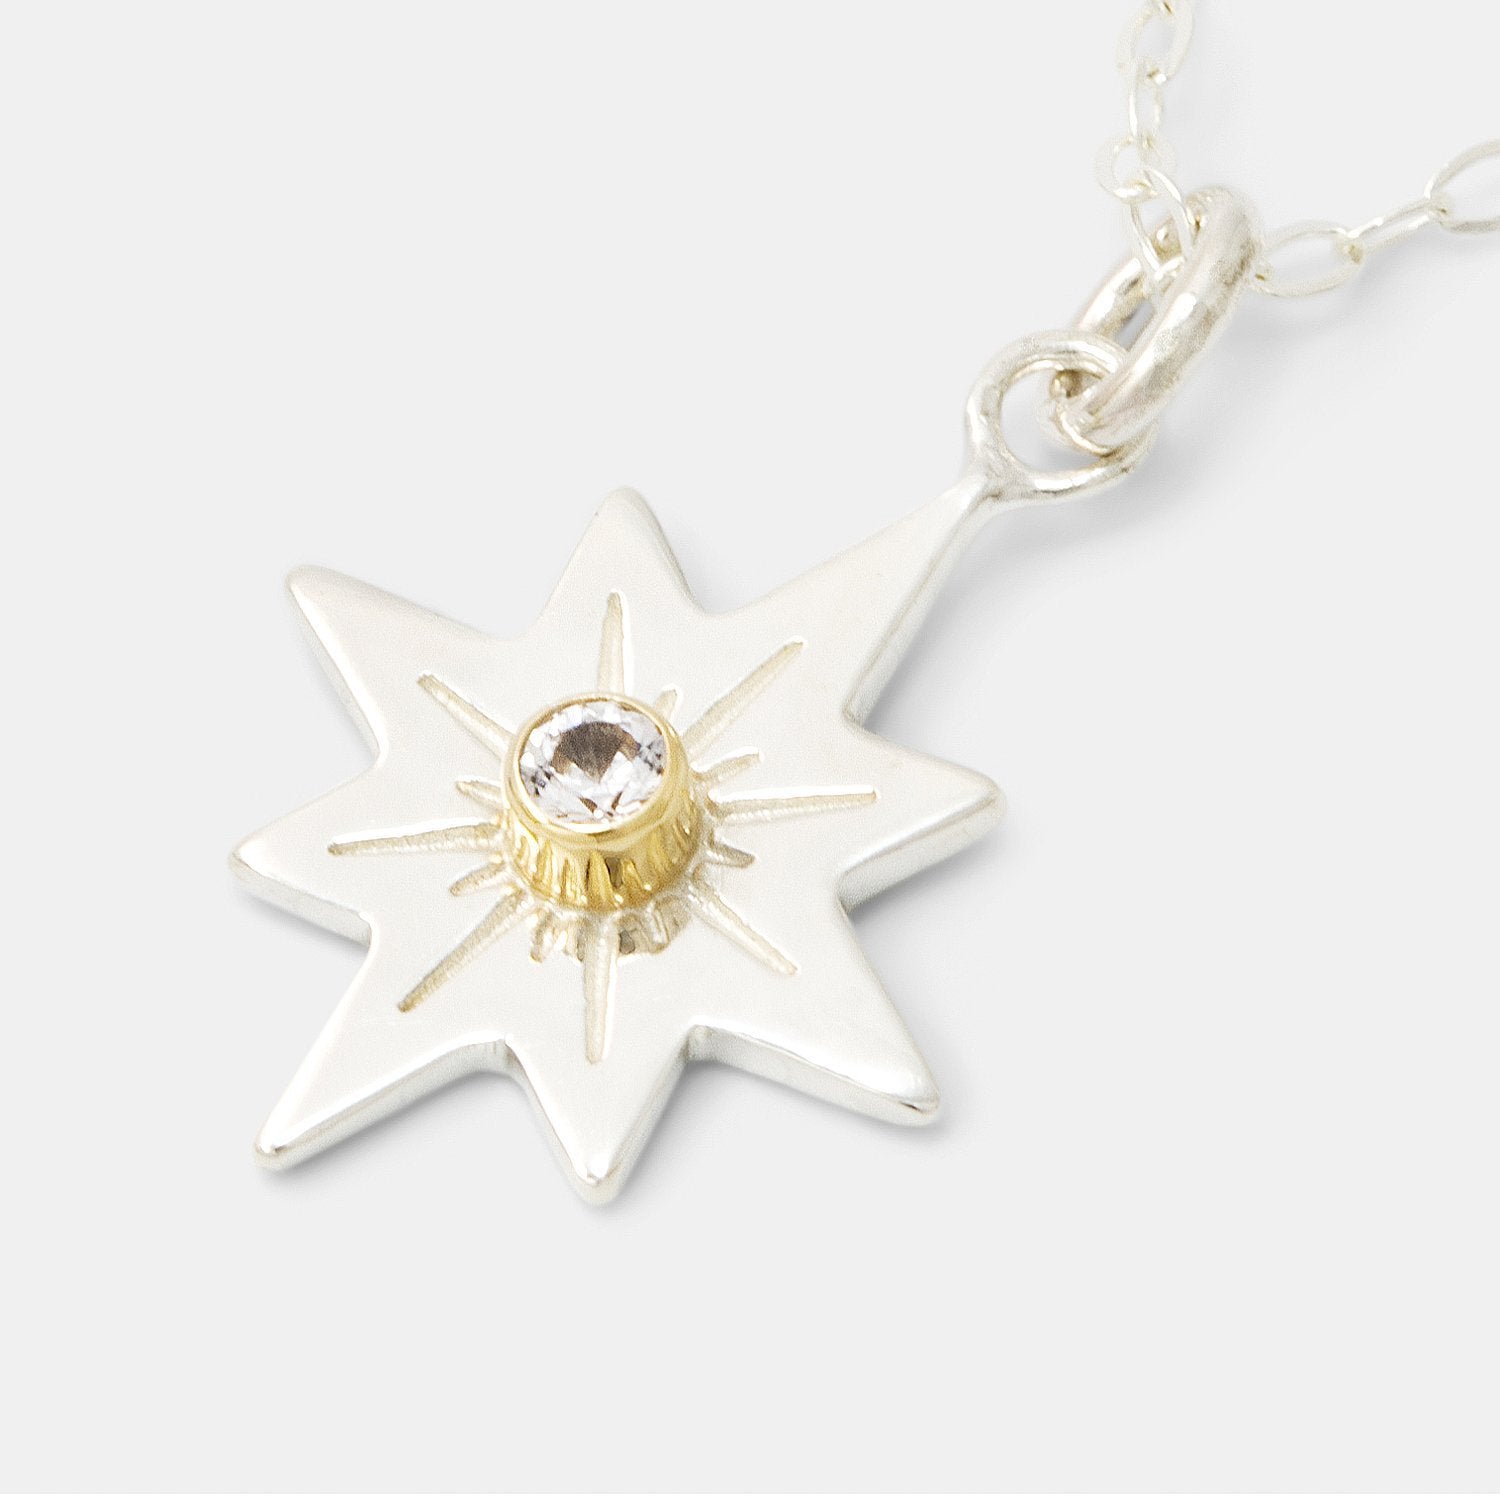 Guiding star & white sapphire necklace - Simone Walsh Jewellery Australia